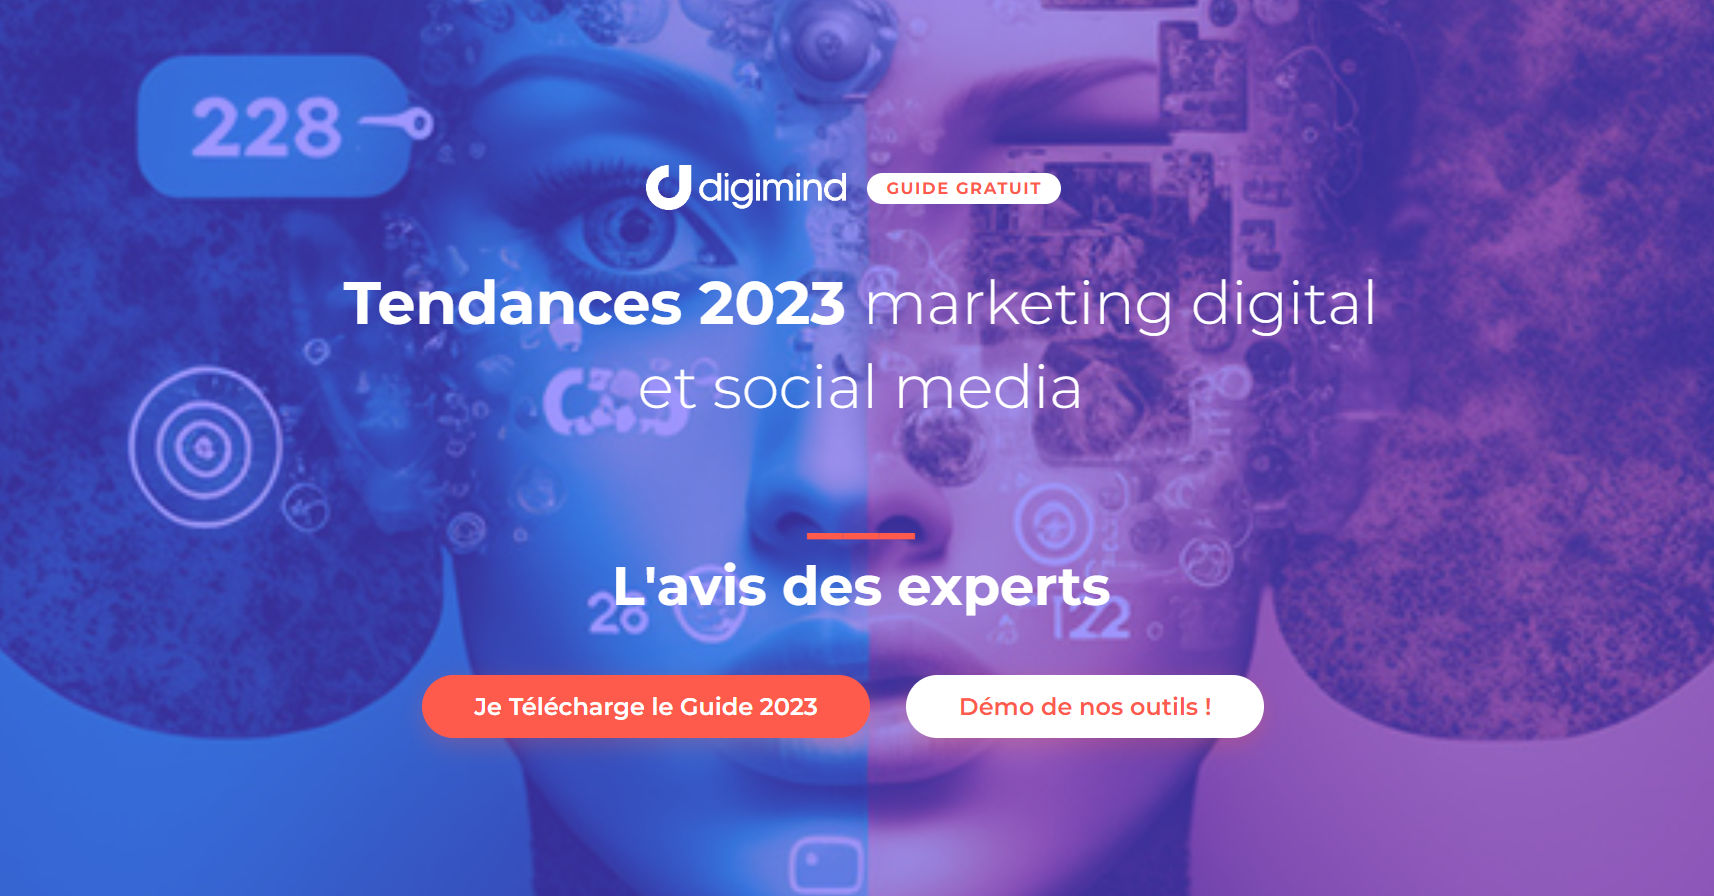 Le Guide 2023 des tendances marketing digital et social media par Digimind